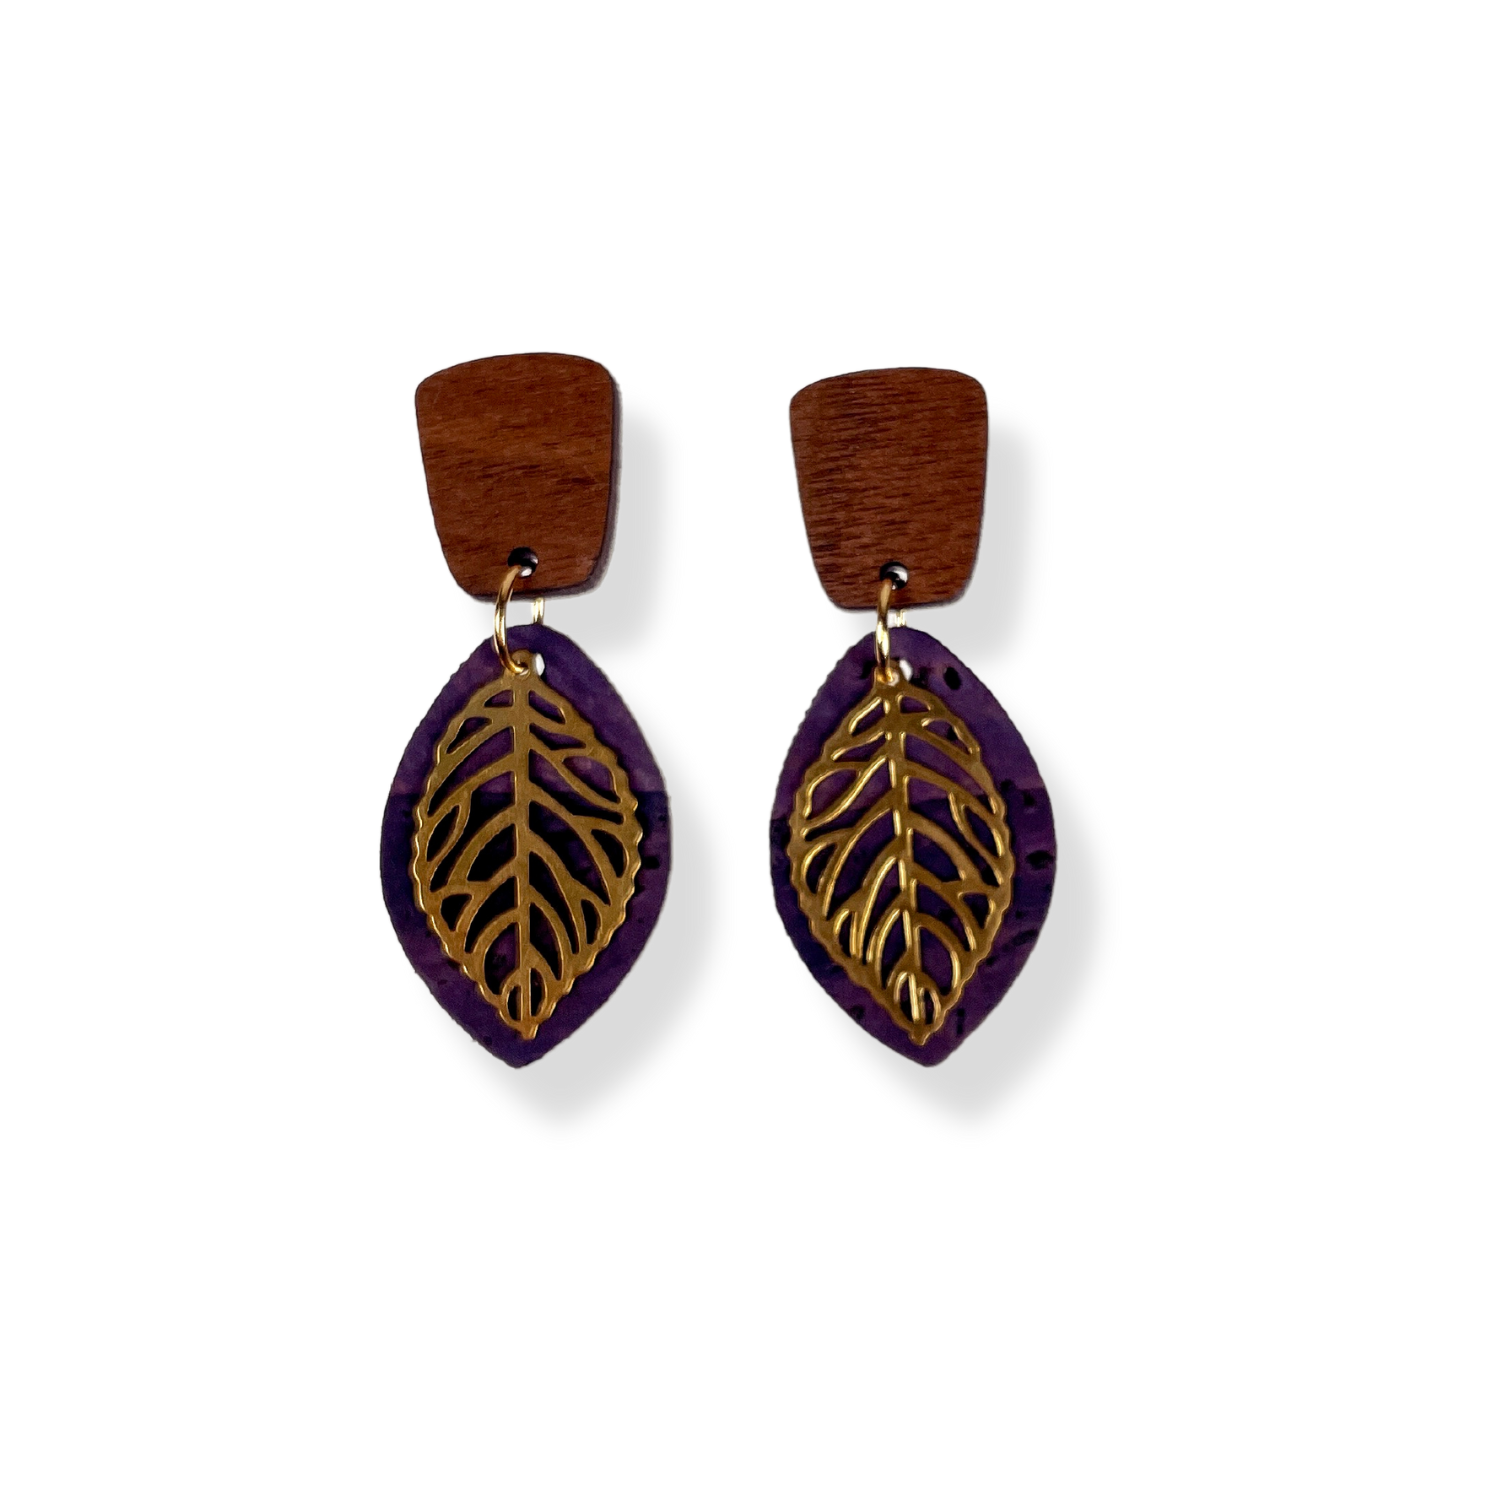 Aspen Walnut Wood and Cork Earrings- Eggplant